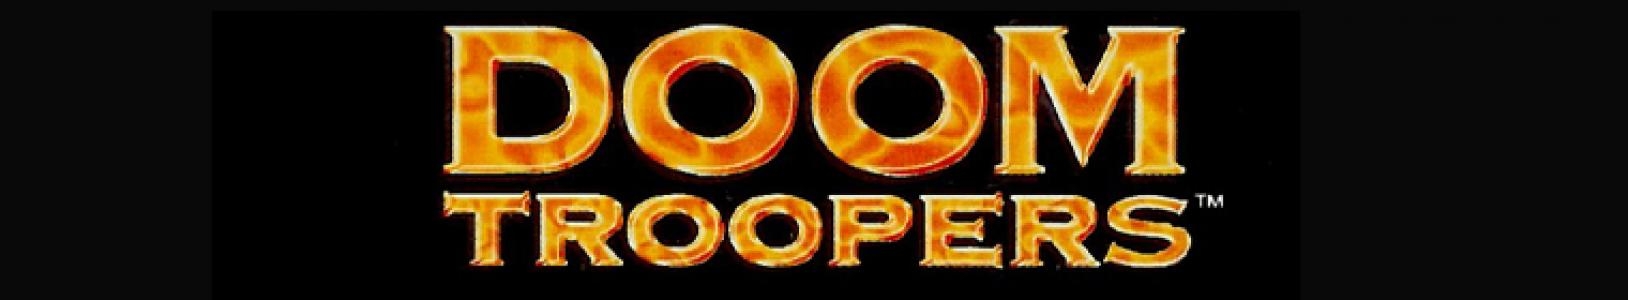 Doom Troopers: Mutant Chronicles banner